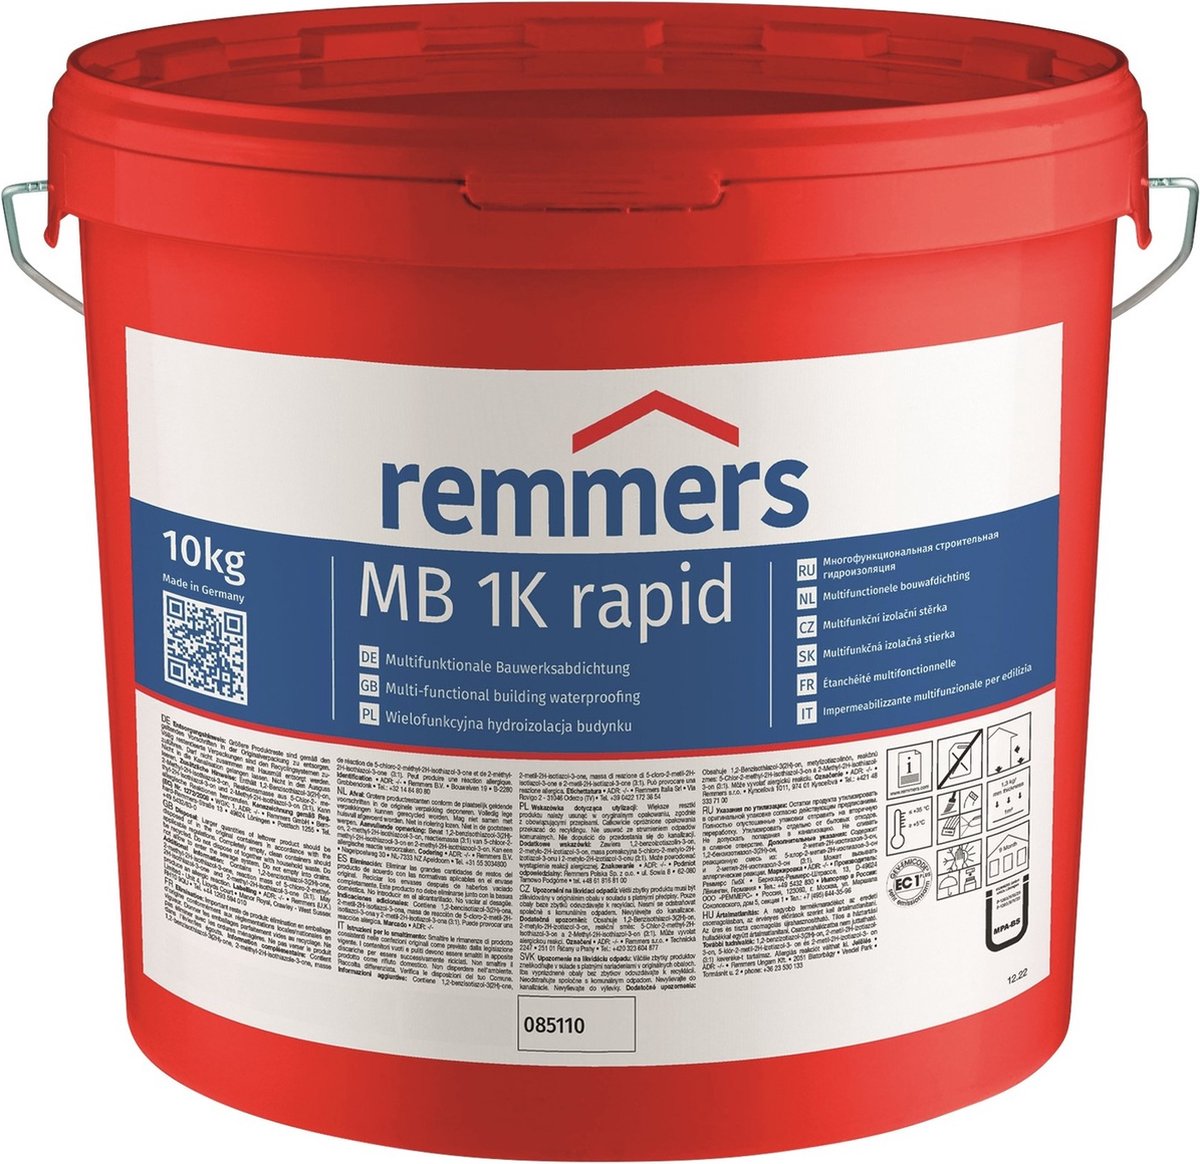 Remmers MB 1K Rapid 10 kg - Remmers